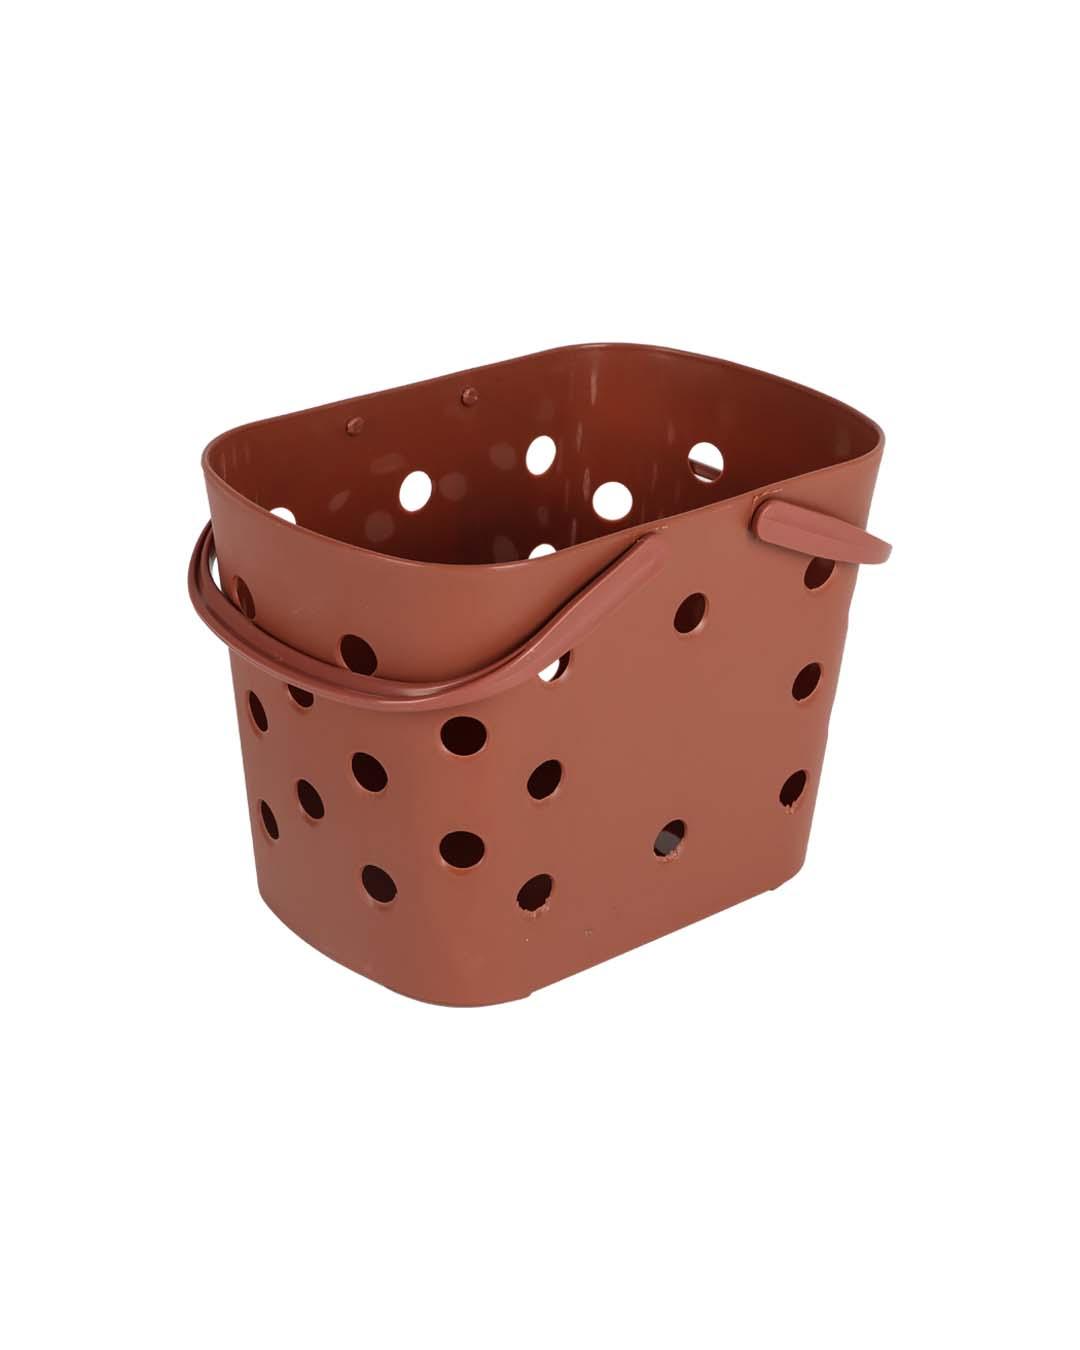 Basket with Handles, Brown, Plastic - MARKET 99